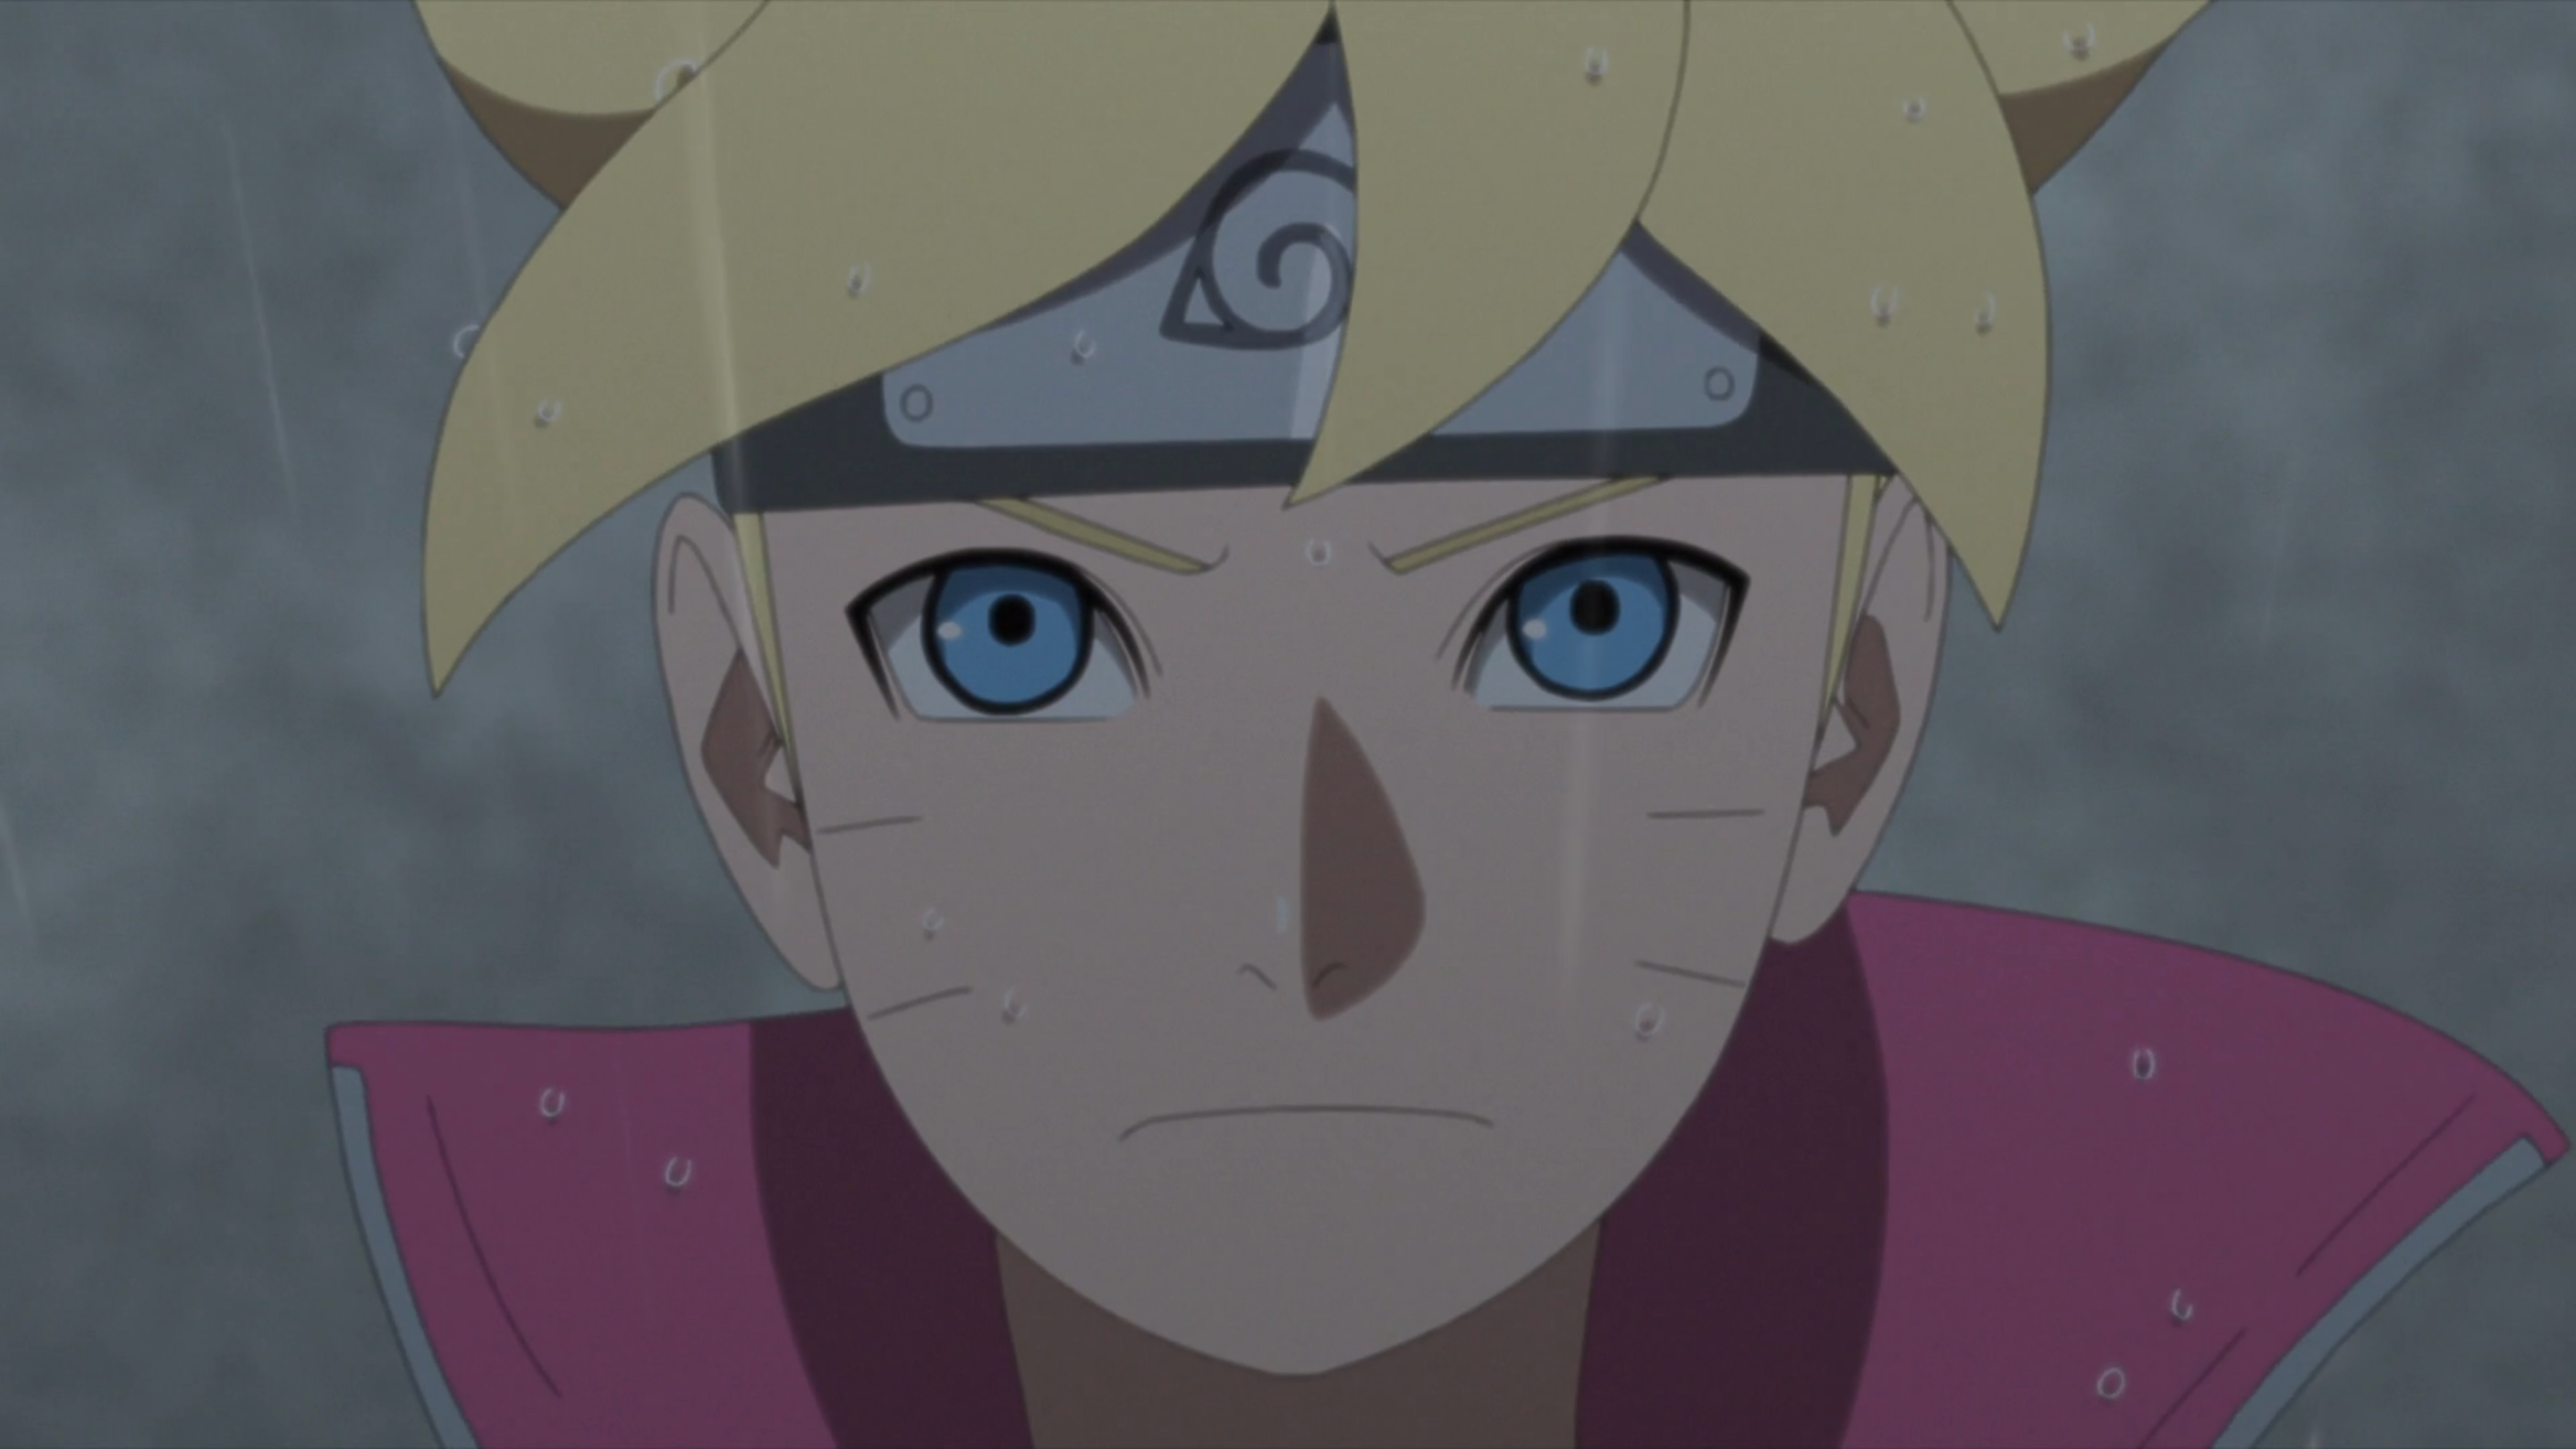 Watch Boruto: Naruto Next Generations Season 1 Episode 252 - The